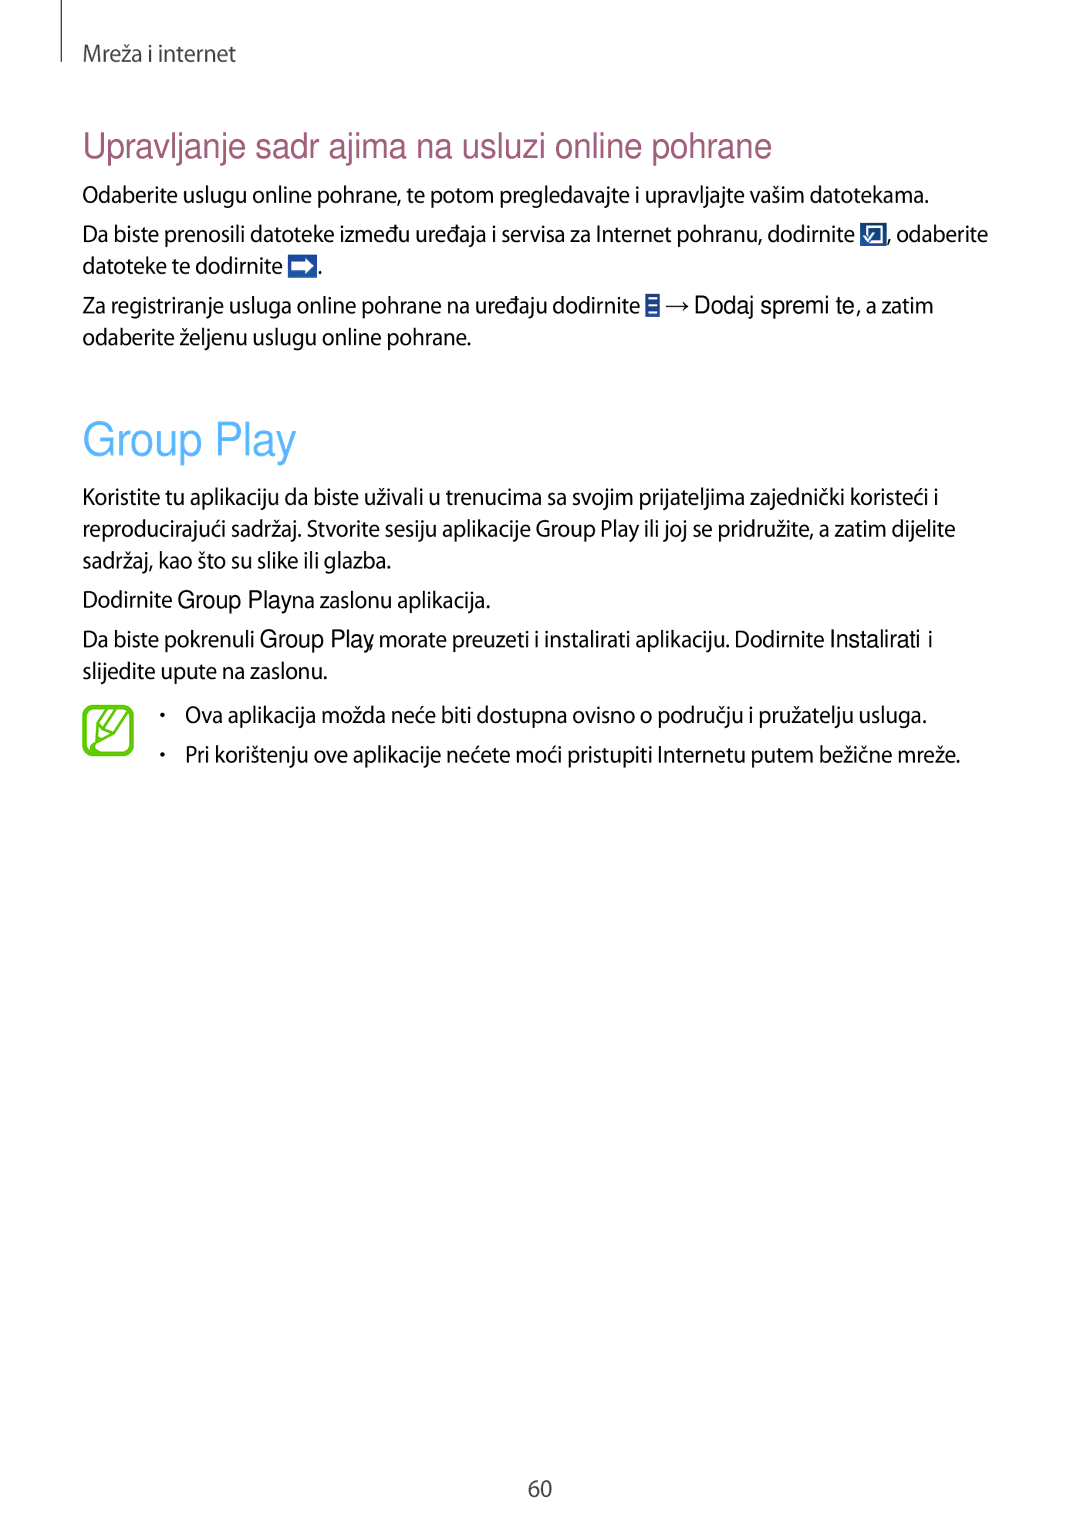 Samsung GT-N8010ZWATRA, GT-N8010GRATRA, GT-N8010EAATRA manual Group Play, Upravljanje sadržajima na usluzi online pohrane 